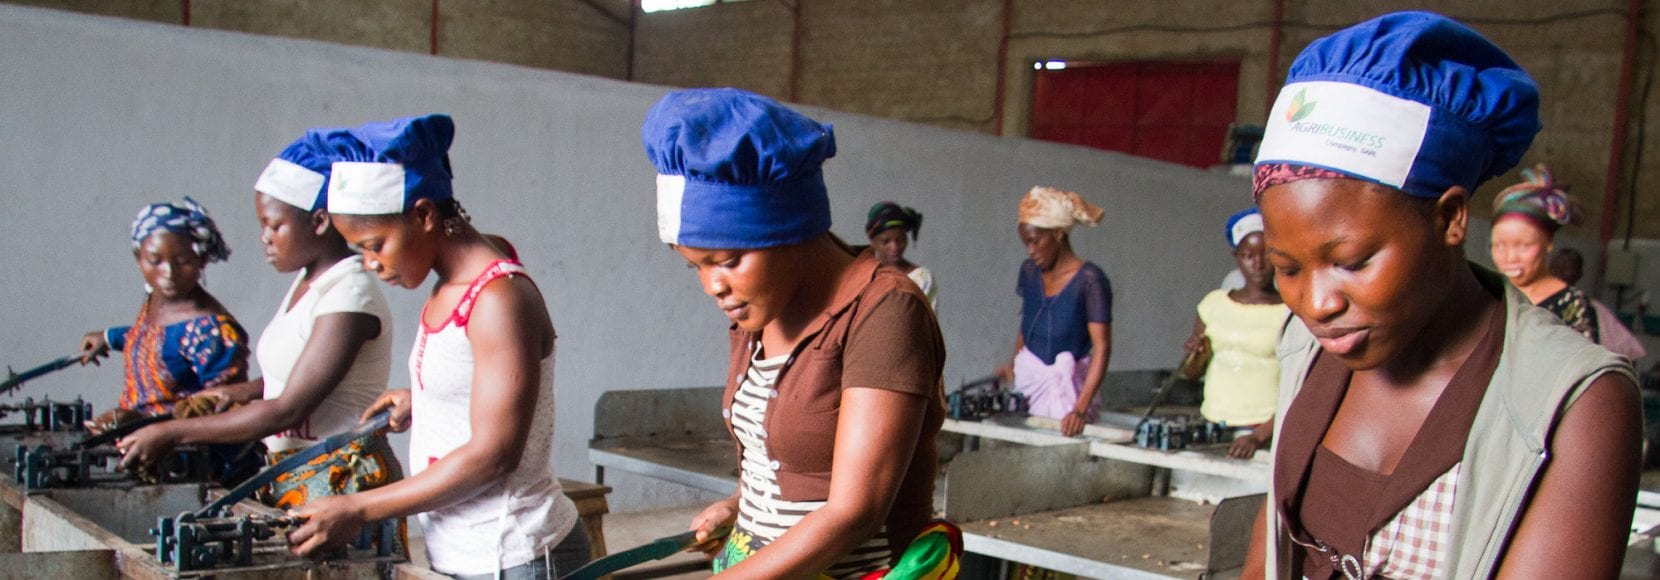 Women deshelling cashews, Agri-Business Company cashew factory, Touba, C™te d'Ivoire. Photo © Nile Sprague Women deshelling cashews, Agri-Business Company cashew factory, Touba, Côte d'Ivoire. Photo © Nile Sprague